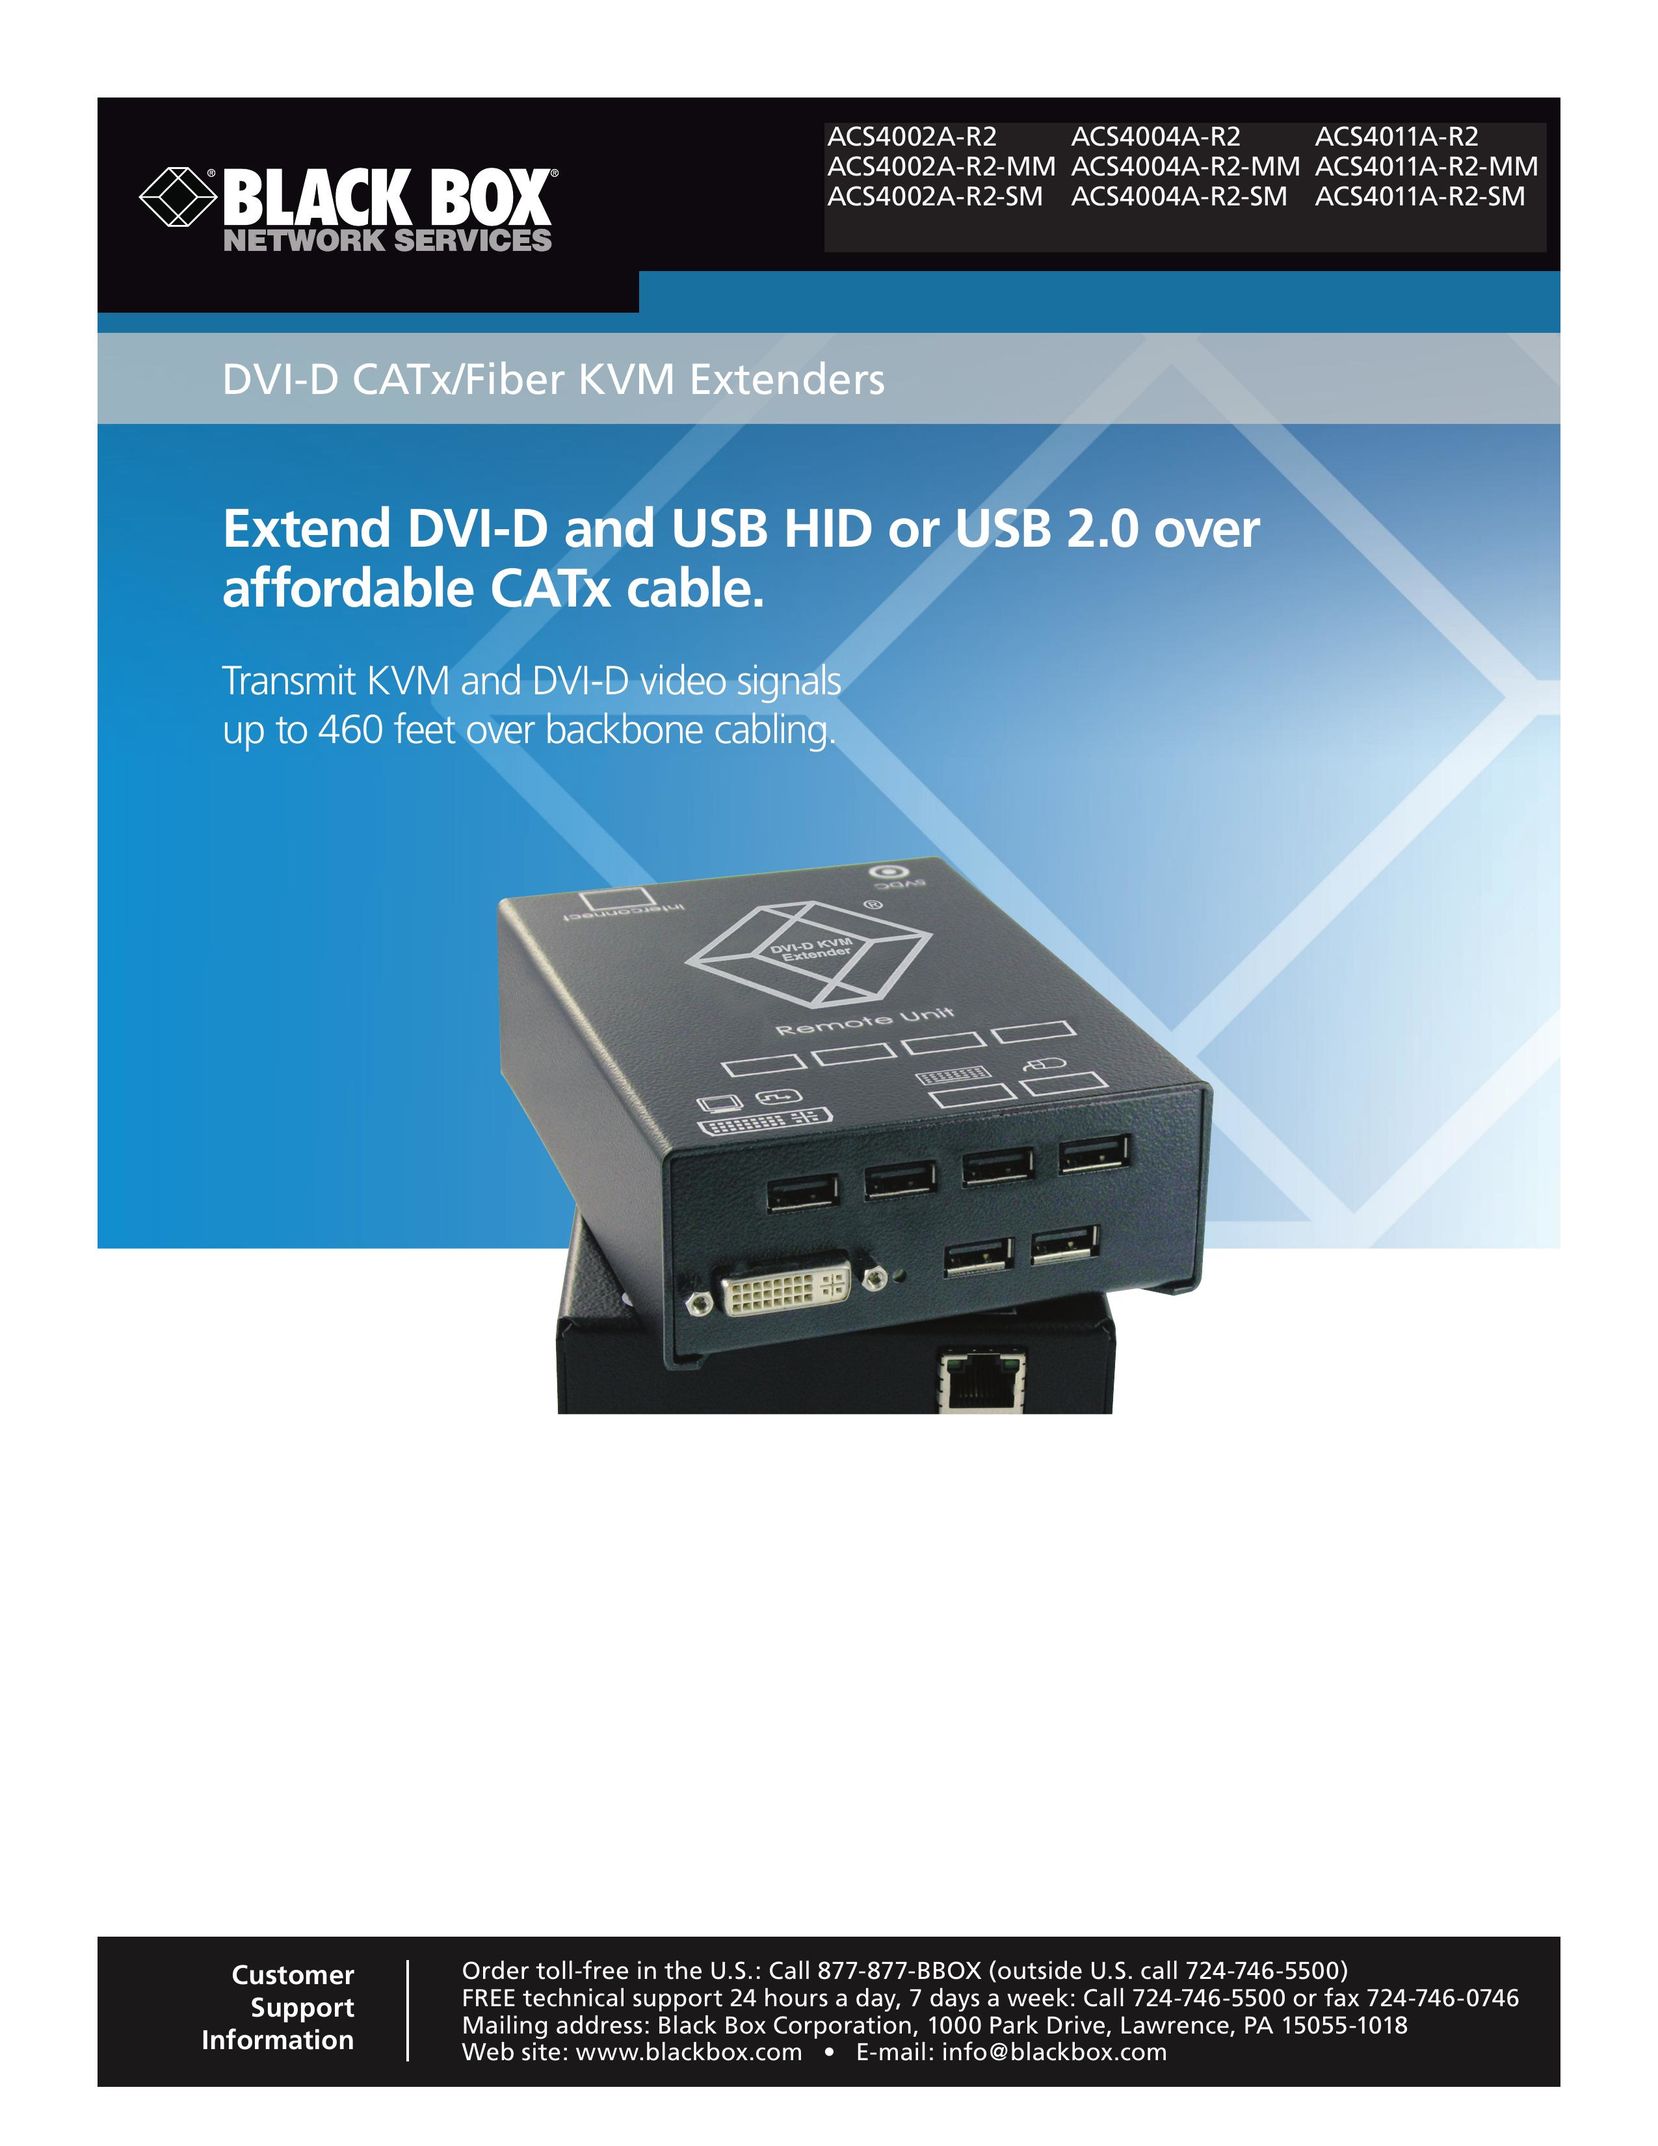 Black Box ACS4004A-R2-MM Network Hardware User Manual